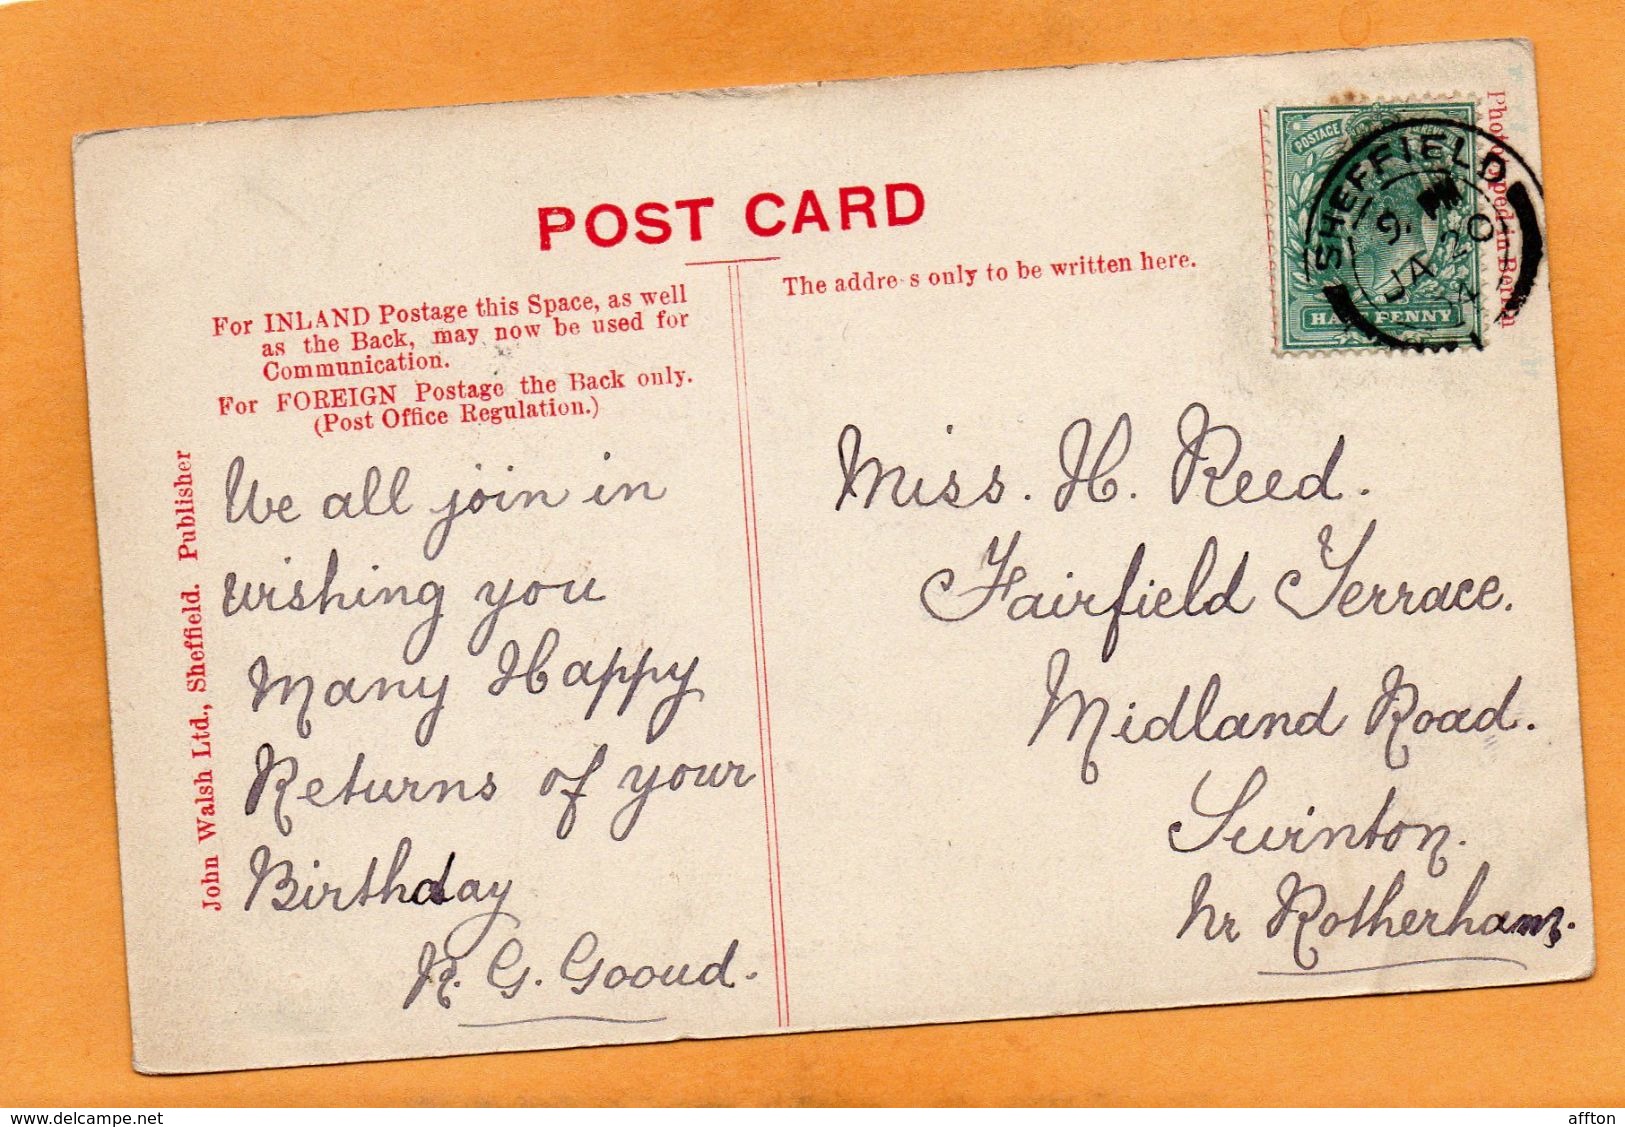 Sheffield UK 1911 Postcard - Sheffield